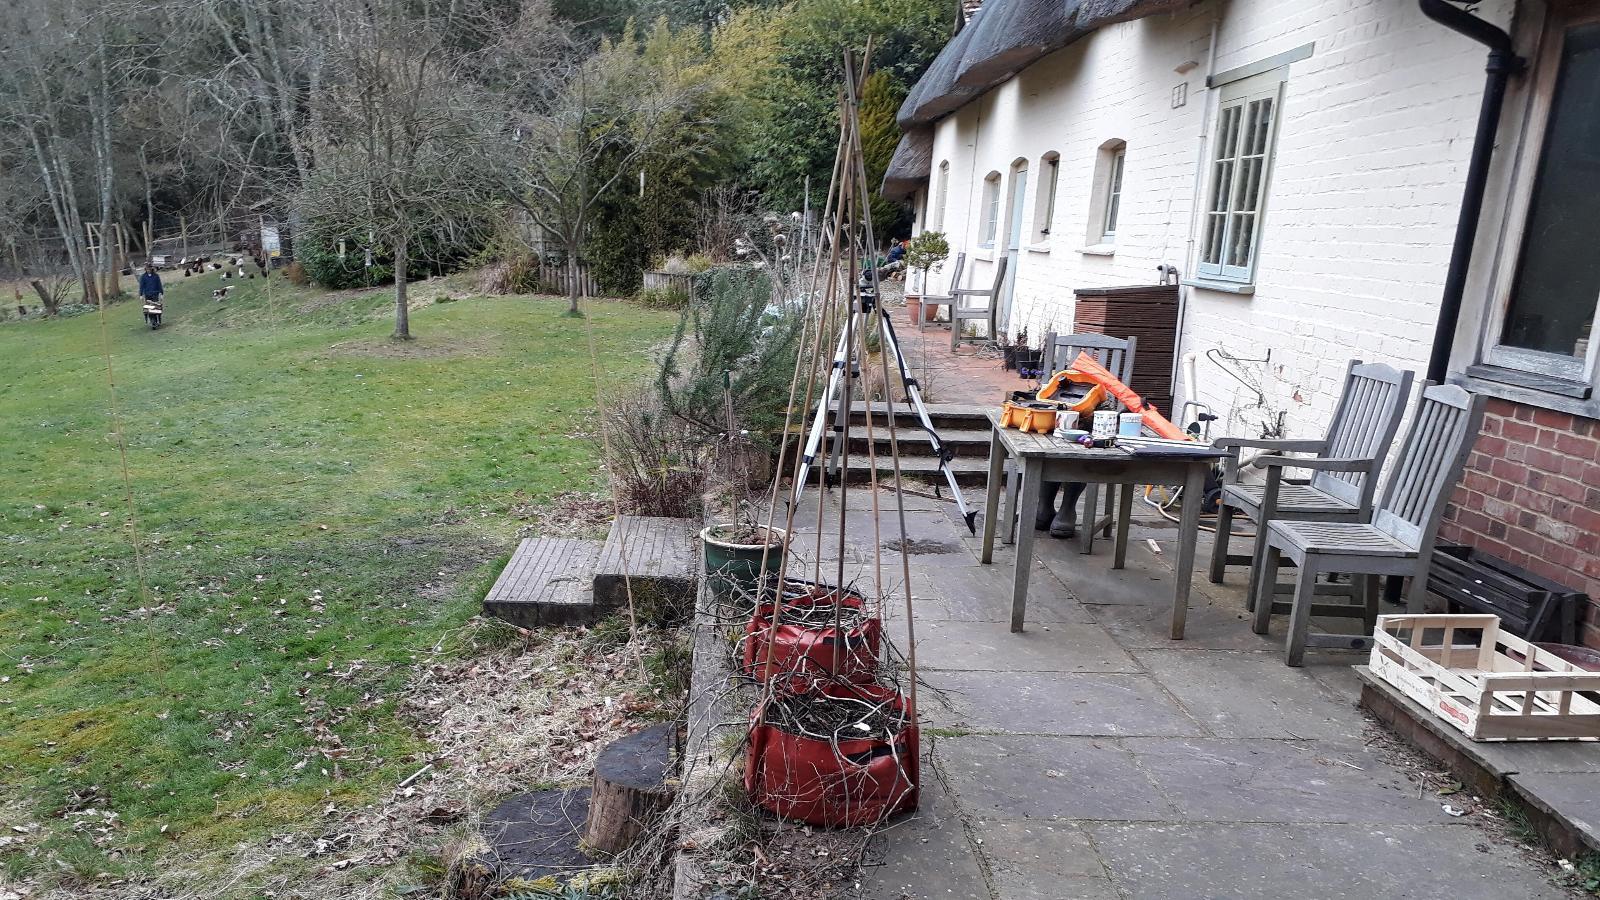 Alison Bockh Garden Design and Landscaping - North Devon -Patio in need of work